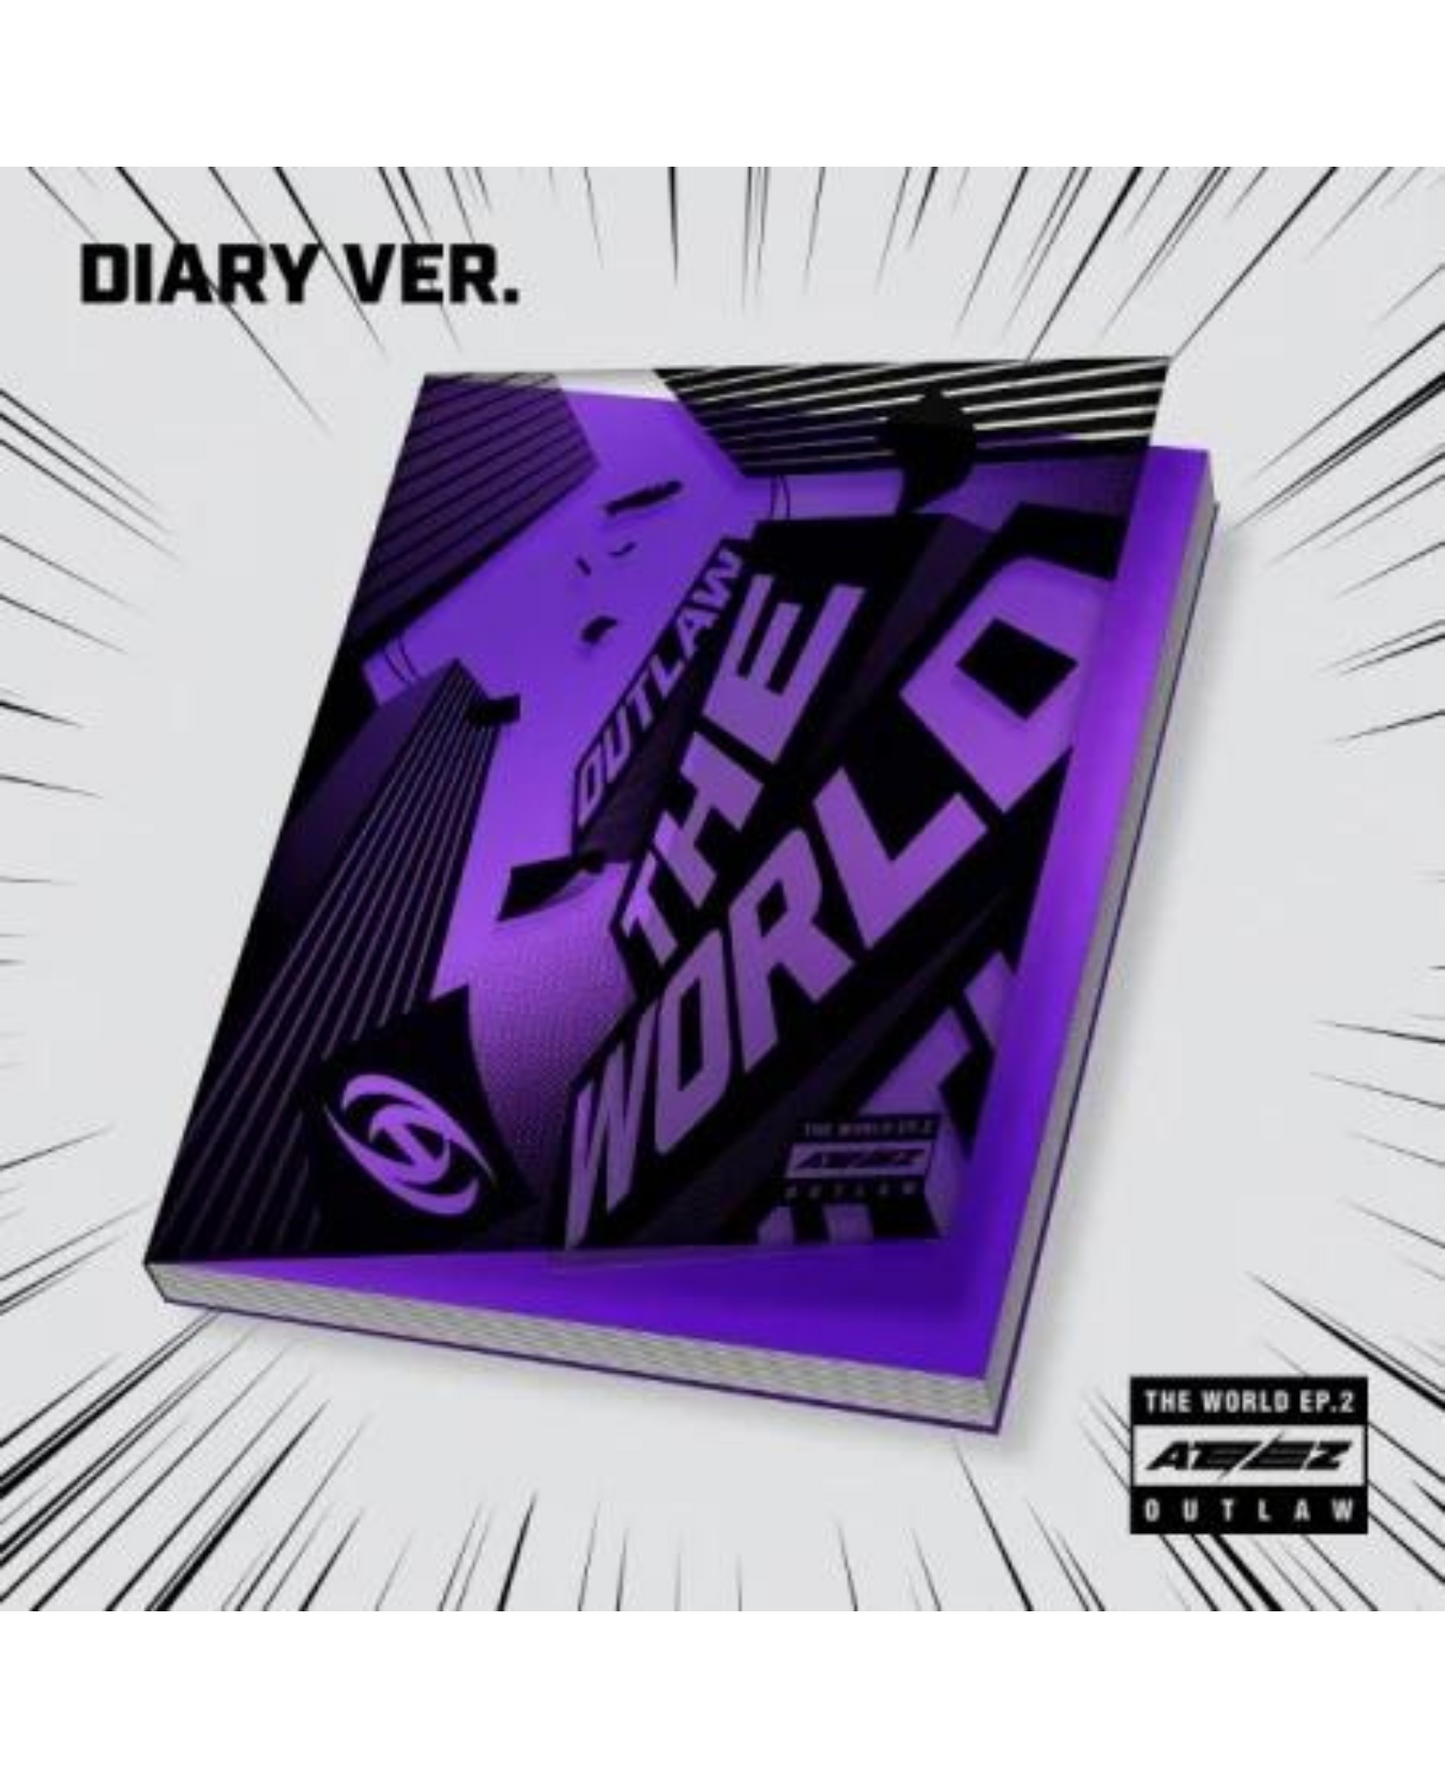 ATEEZ - THE WORLD EP.2 : OUTLAW (Diary/Z/A Ver.) Ateez